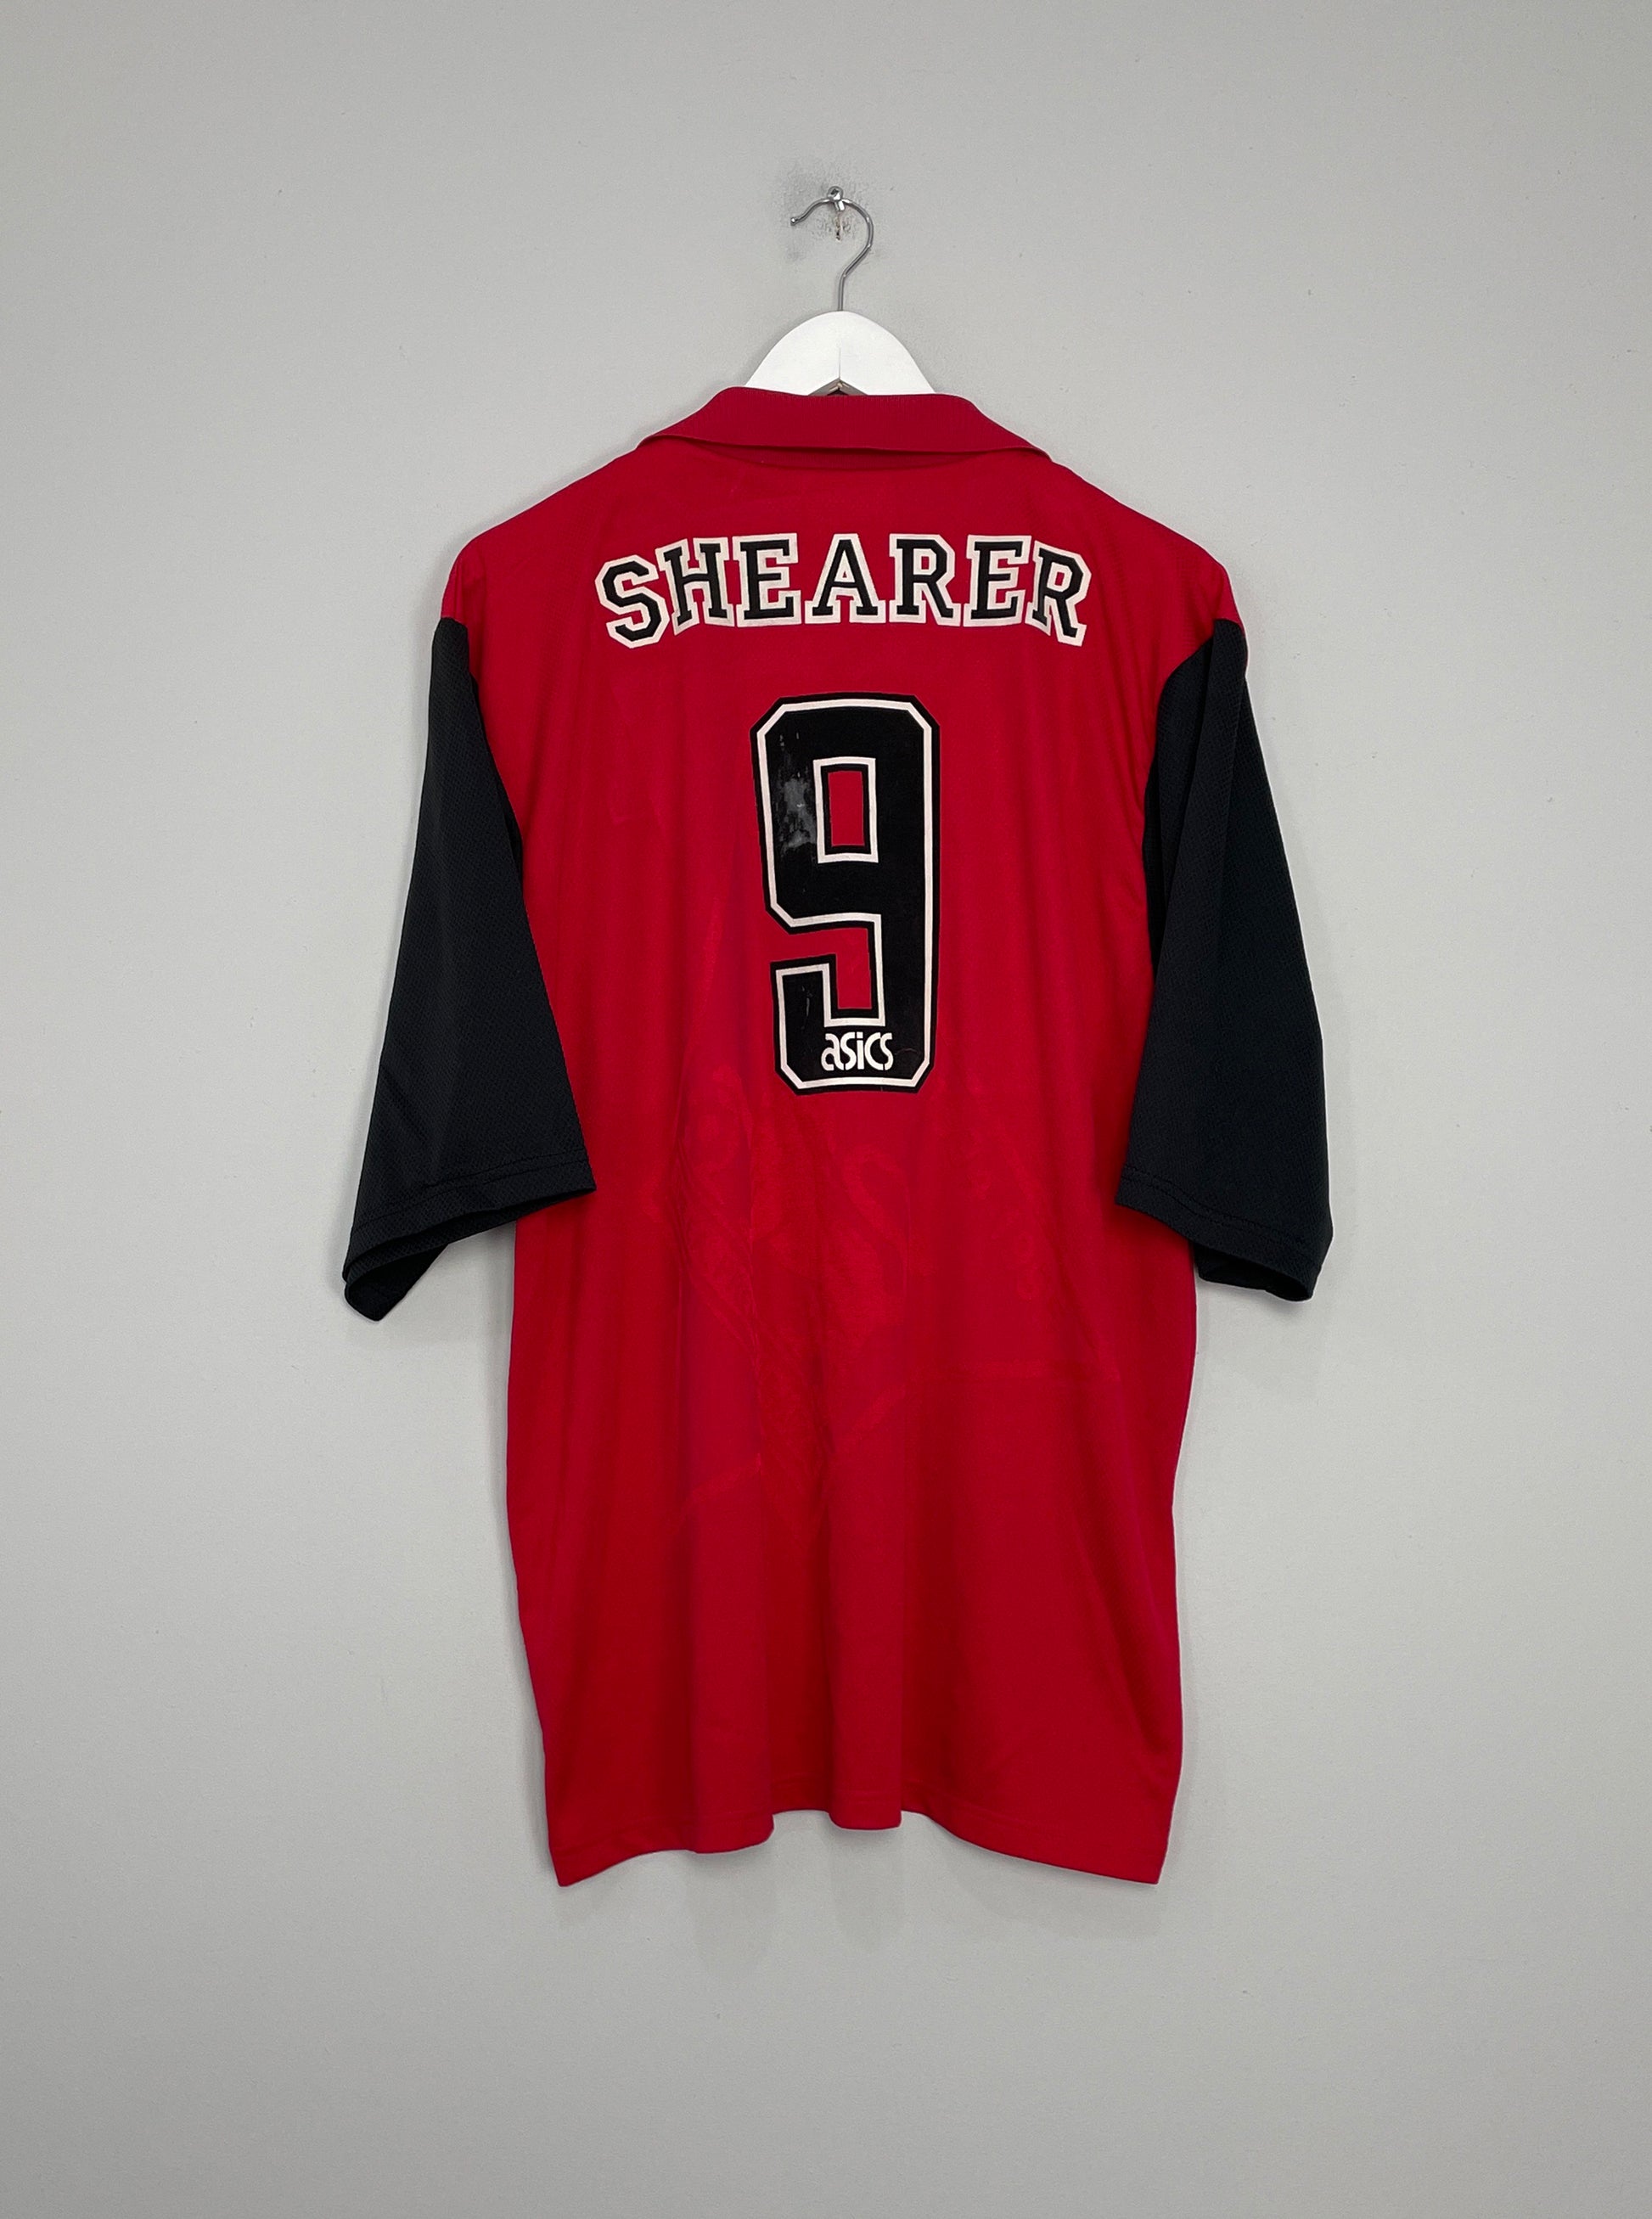 Image of the Blackburn Shearer shirt from the 1995/96 season